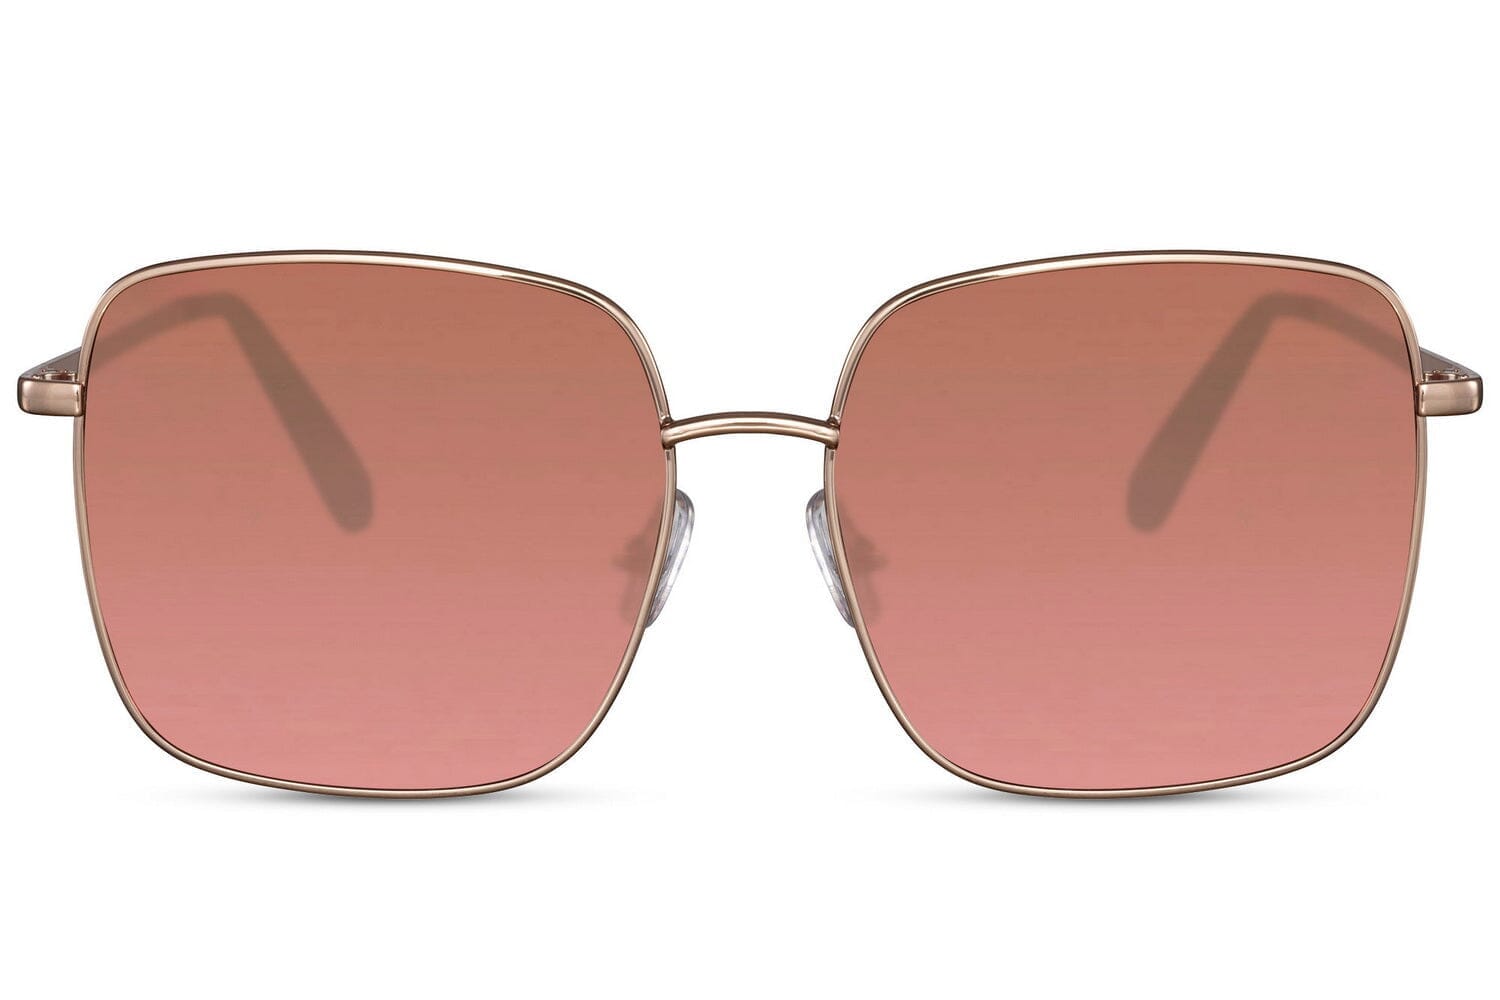 Gold frame sunglasses. Brown lenses. Gold frames.  Sqaure UV400 protected.